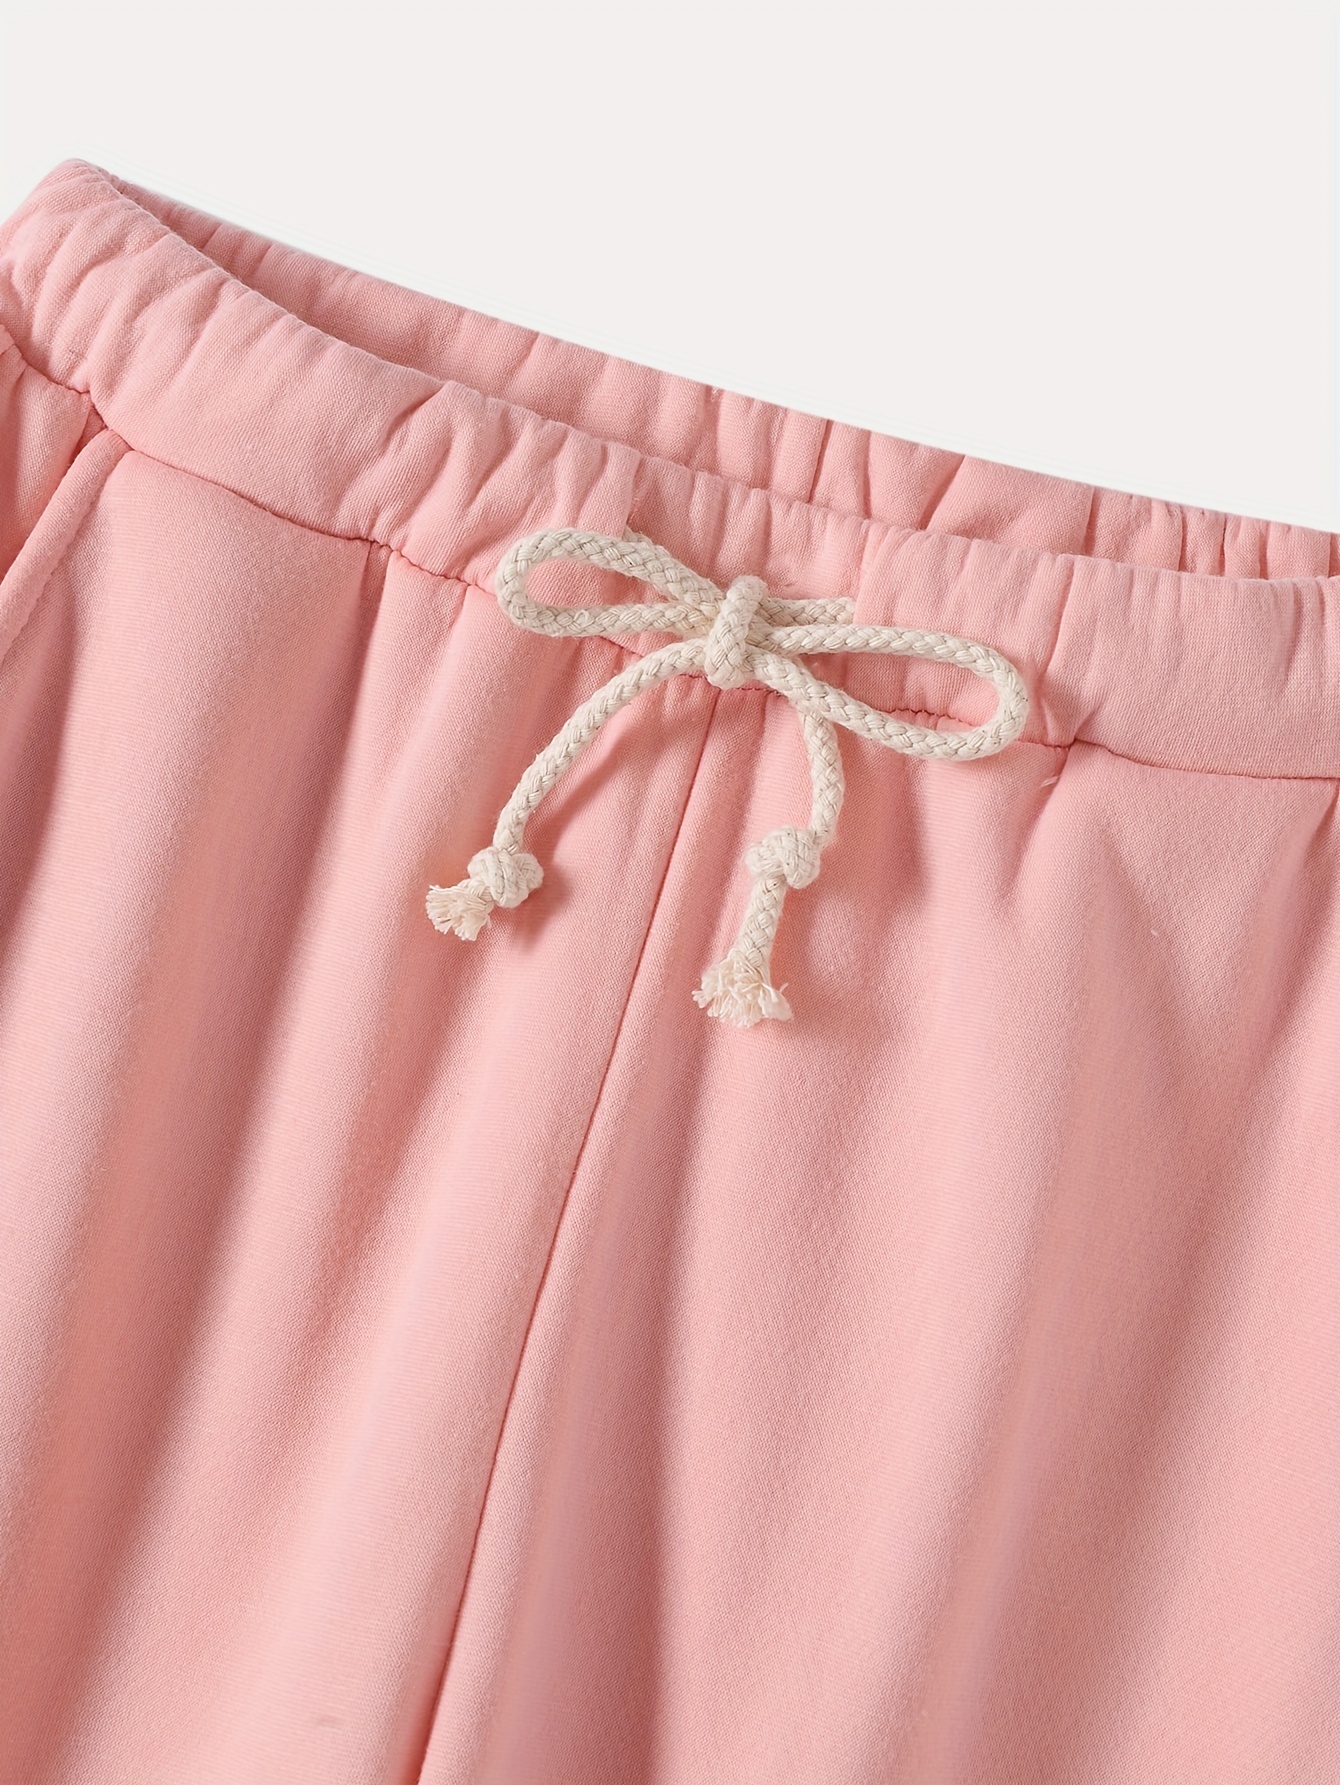 solid drawstring thermal sweatpants versatile loose comfy jogger pants womens clothing details 31